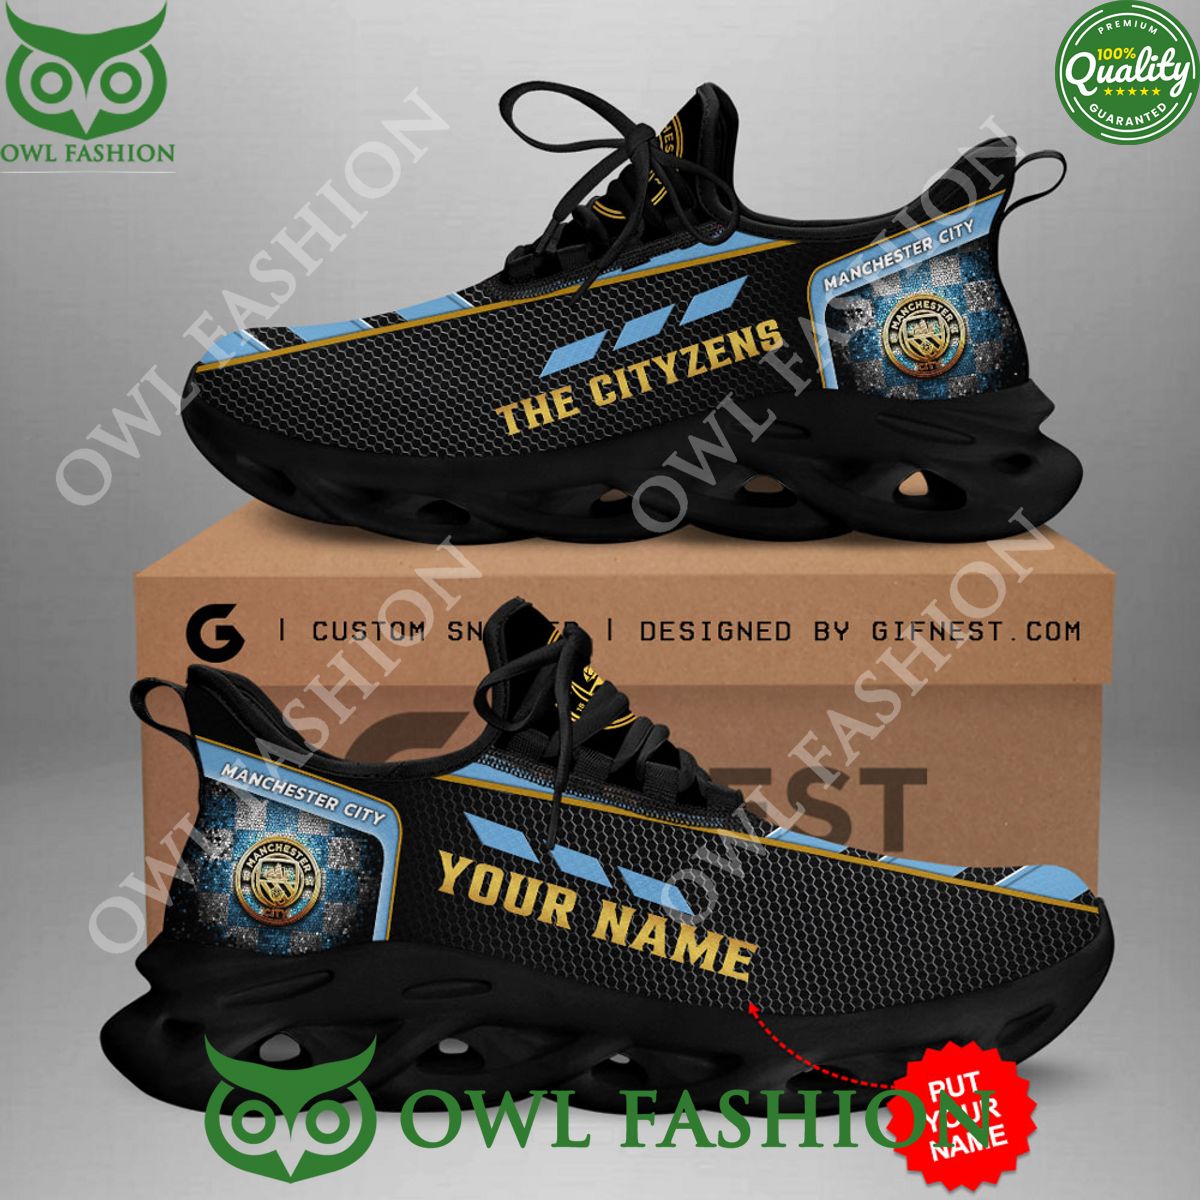 the citizens manchester city customized black max soul sneaker 1 DJ3qu.jpg